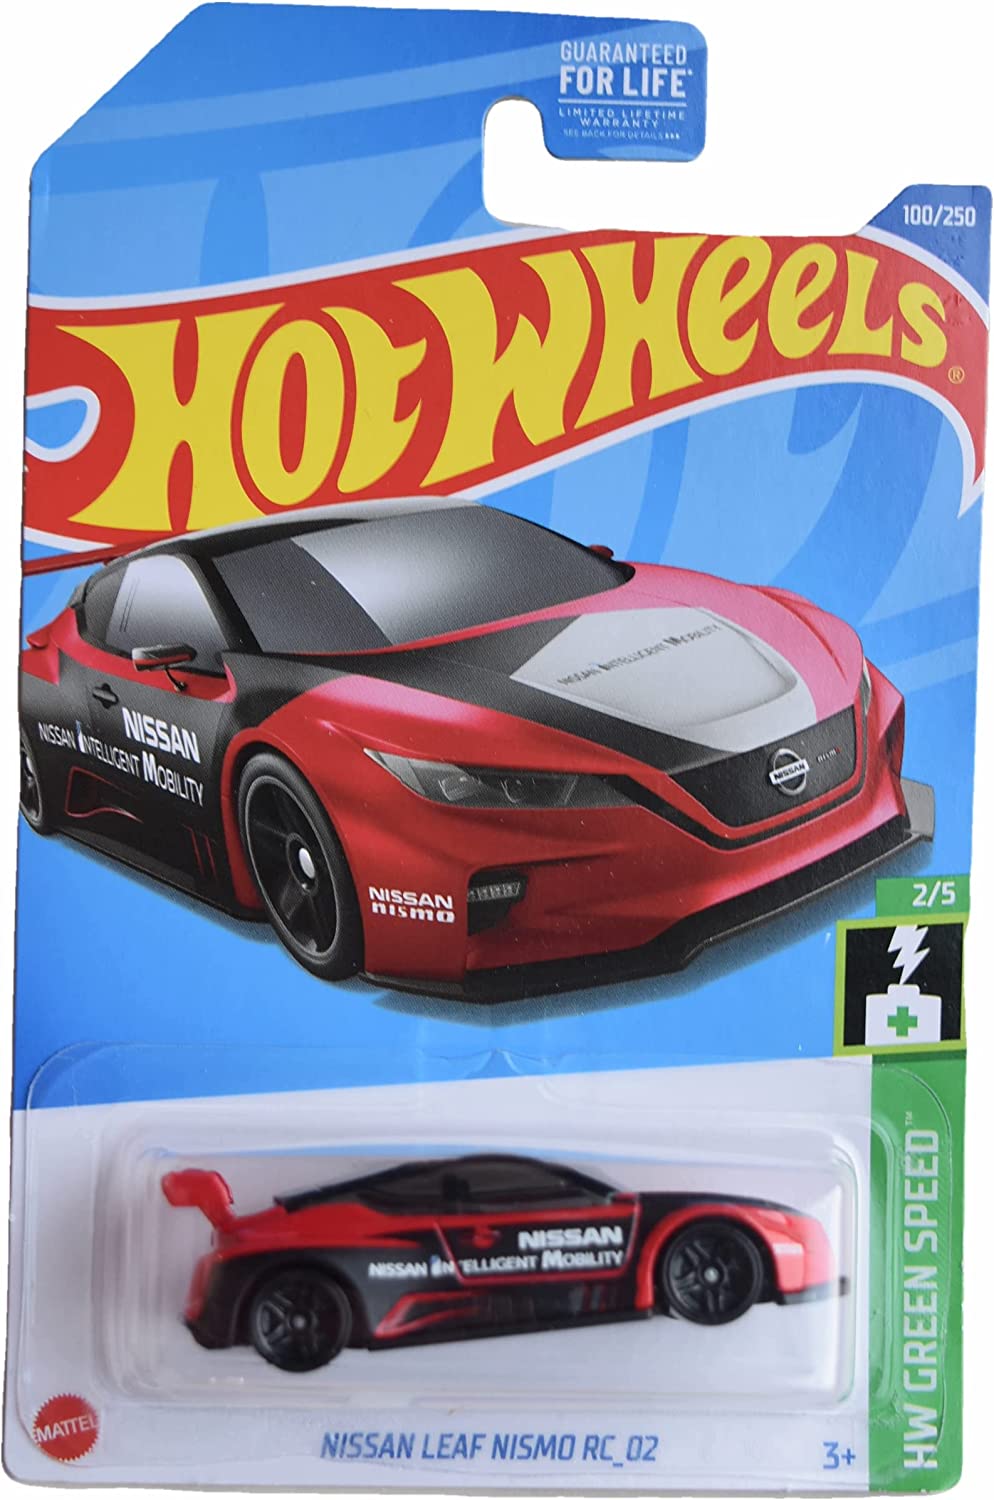 Hot Wheels Nissan Leaf NISMO RC_02 Red HW Green Speed 2/5 100/250